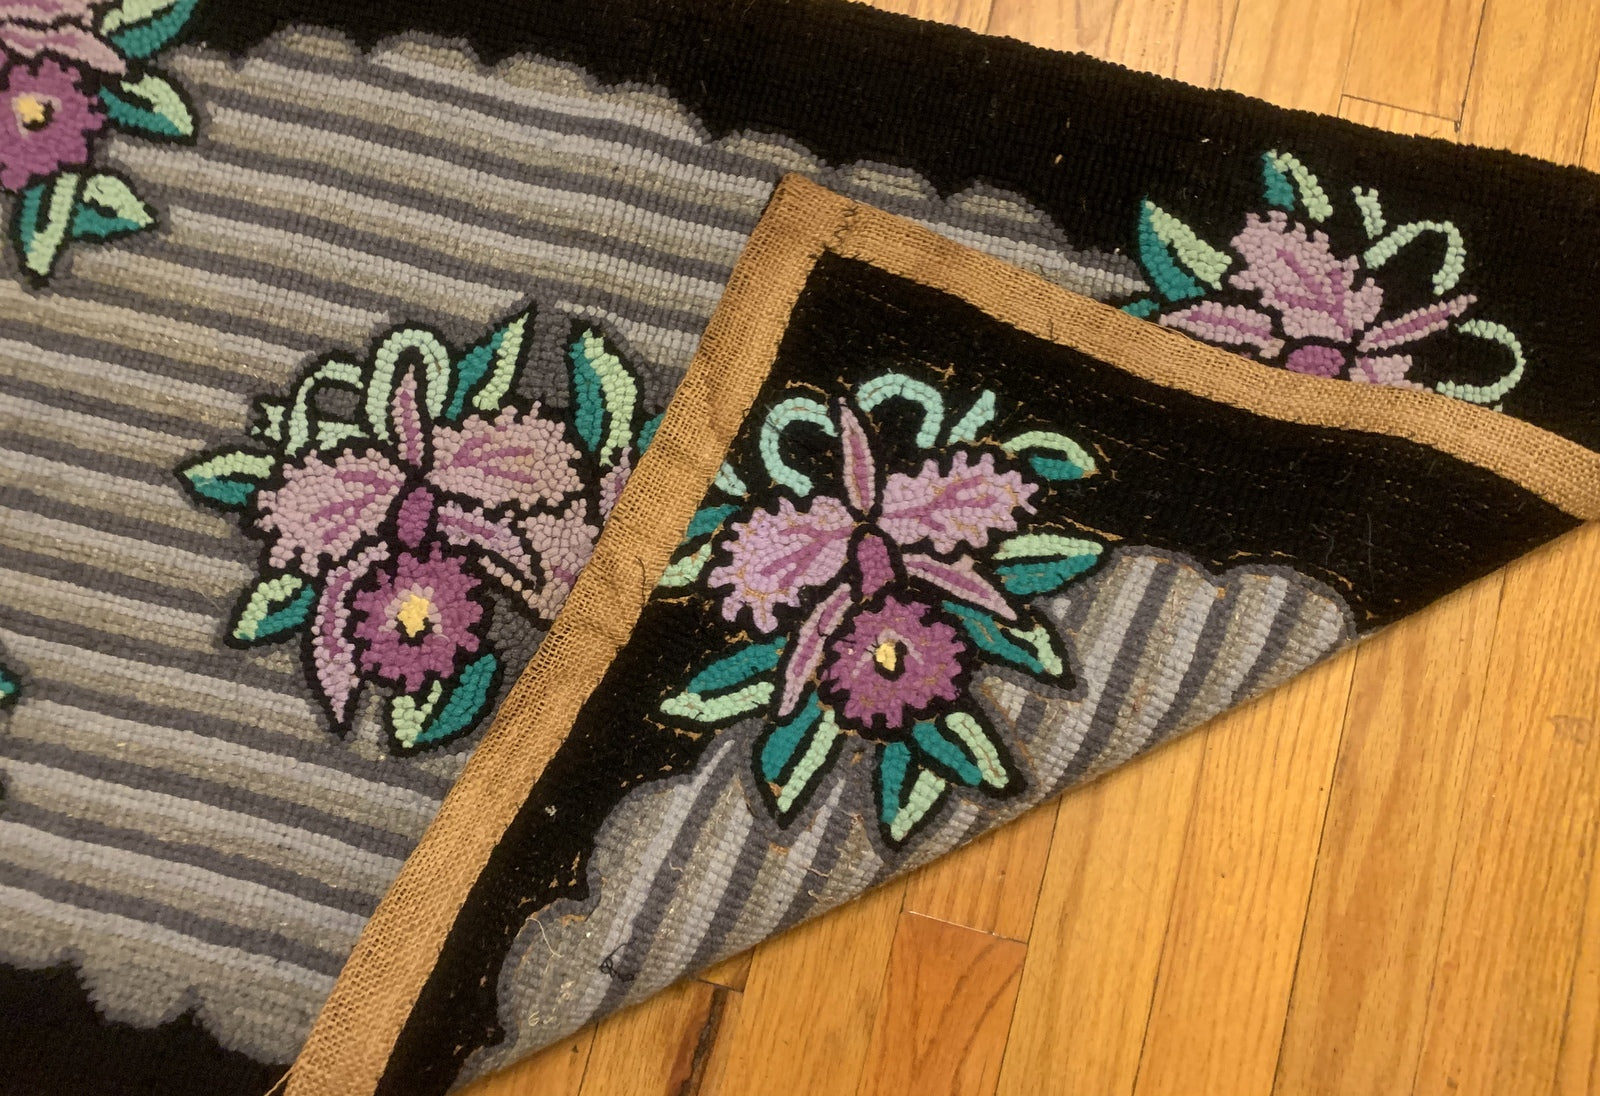 Handmade antique American Hooked rug 1910s